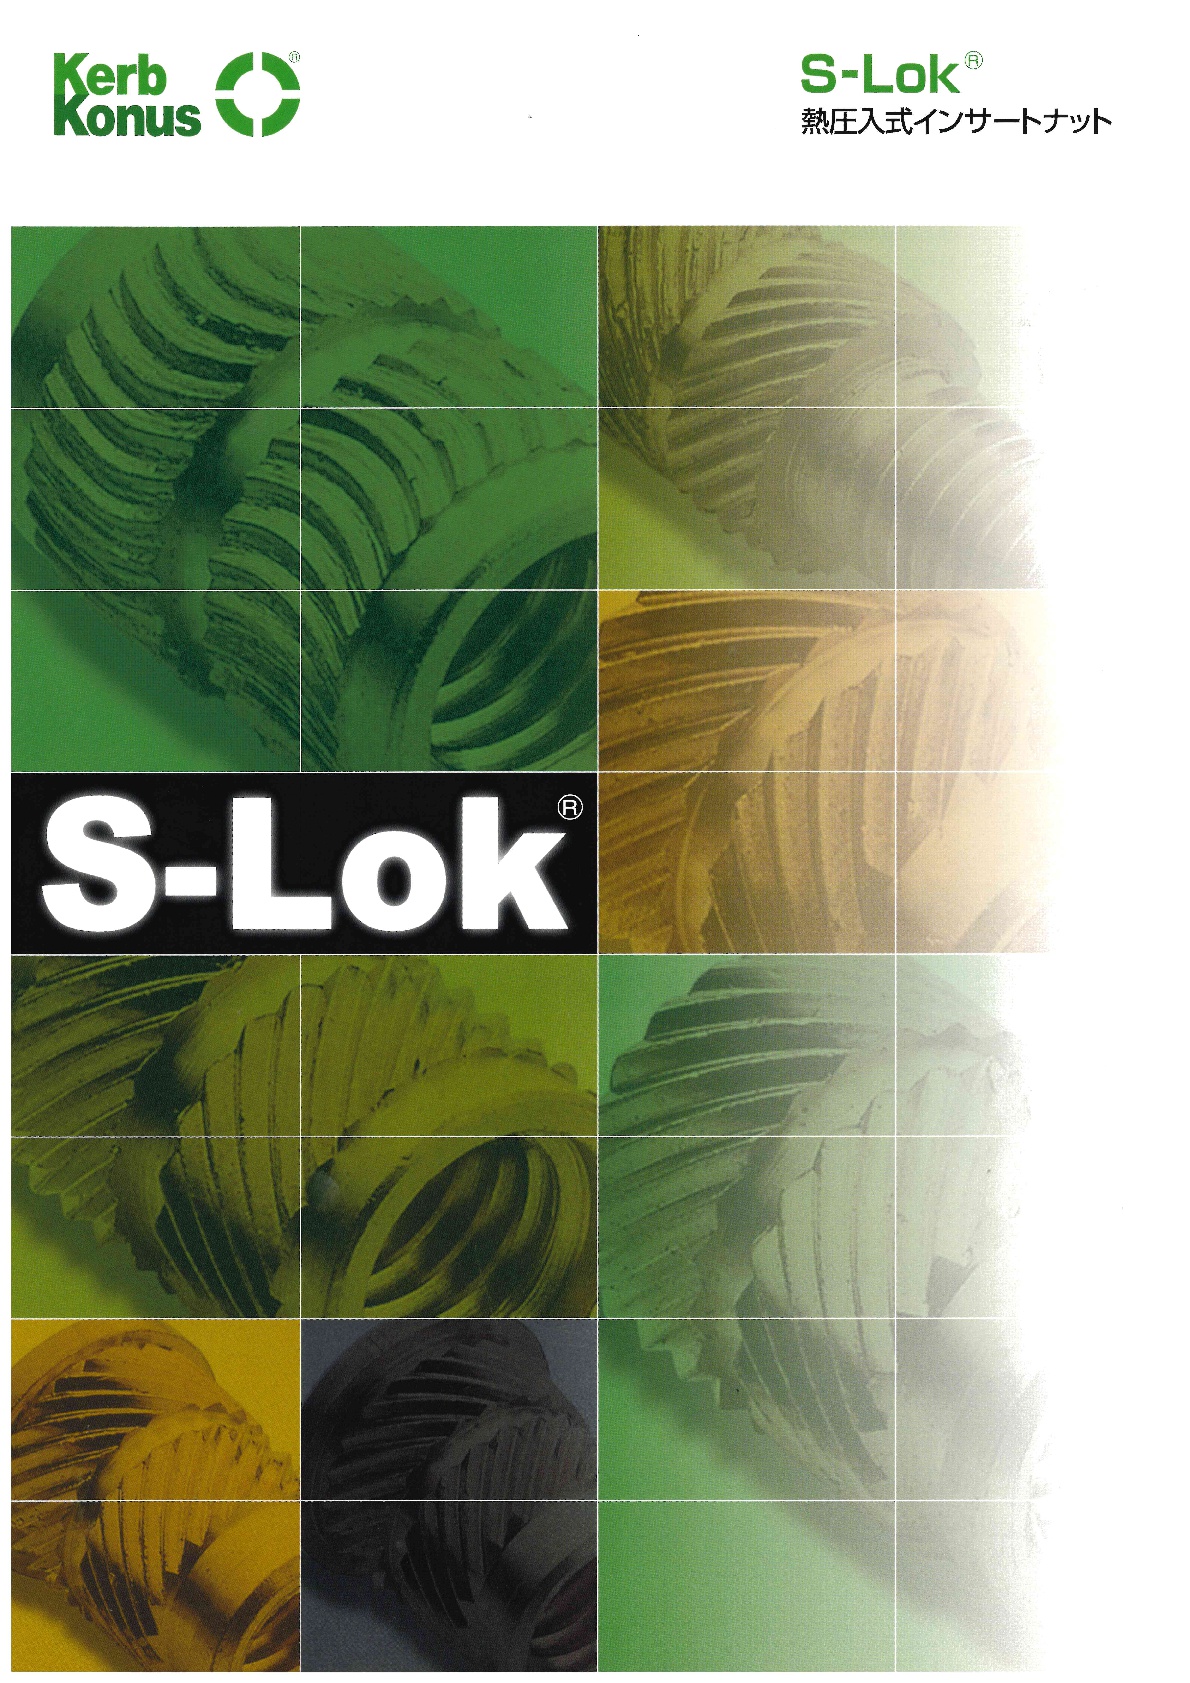 S-Lok